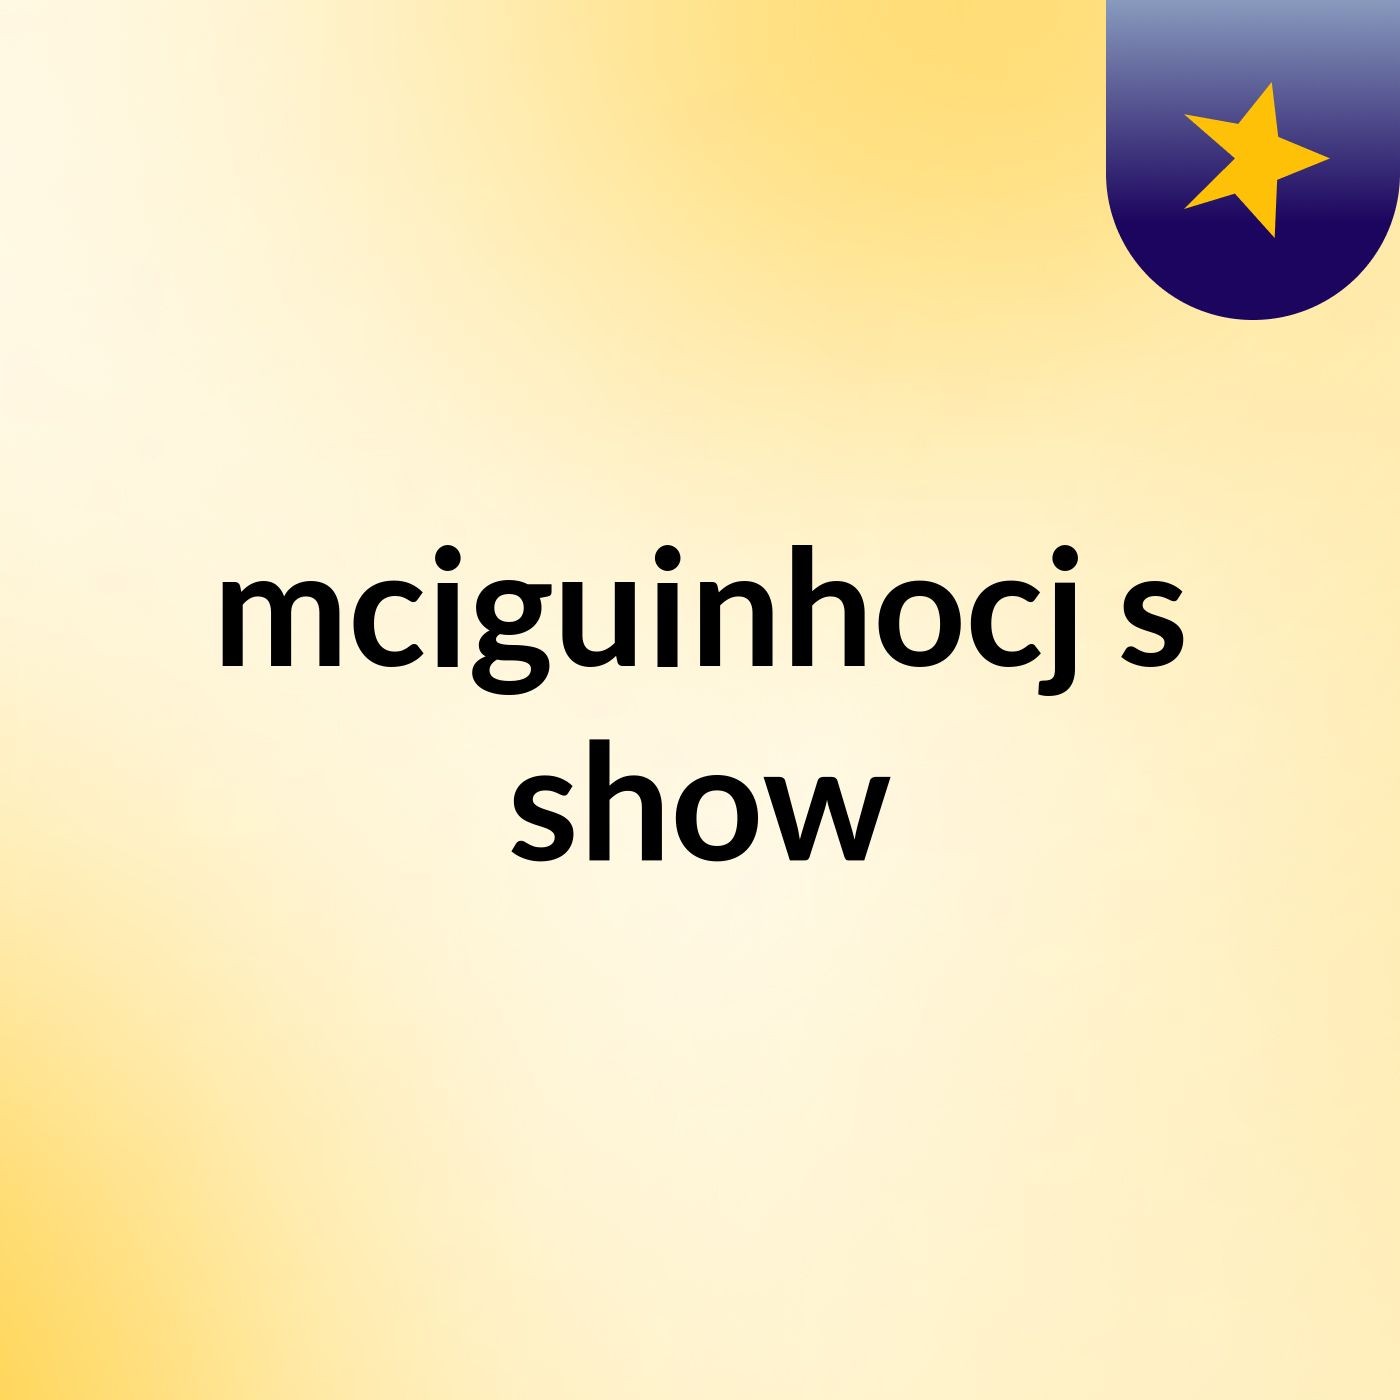 mciguinhocj's show